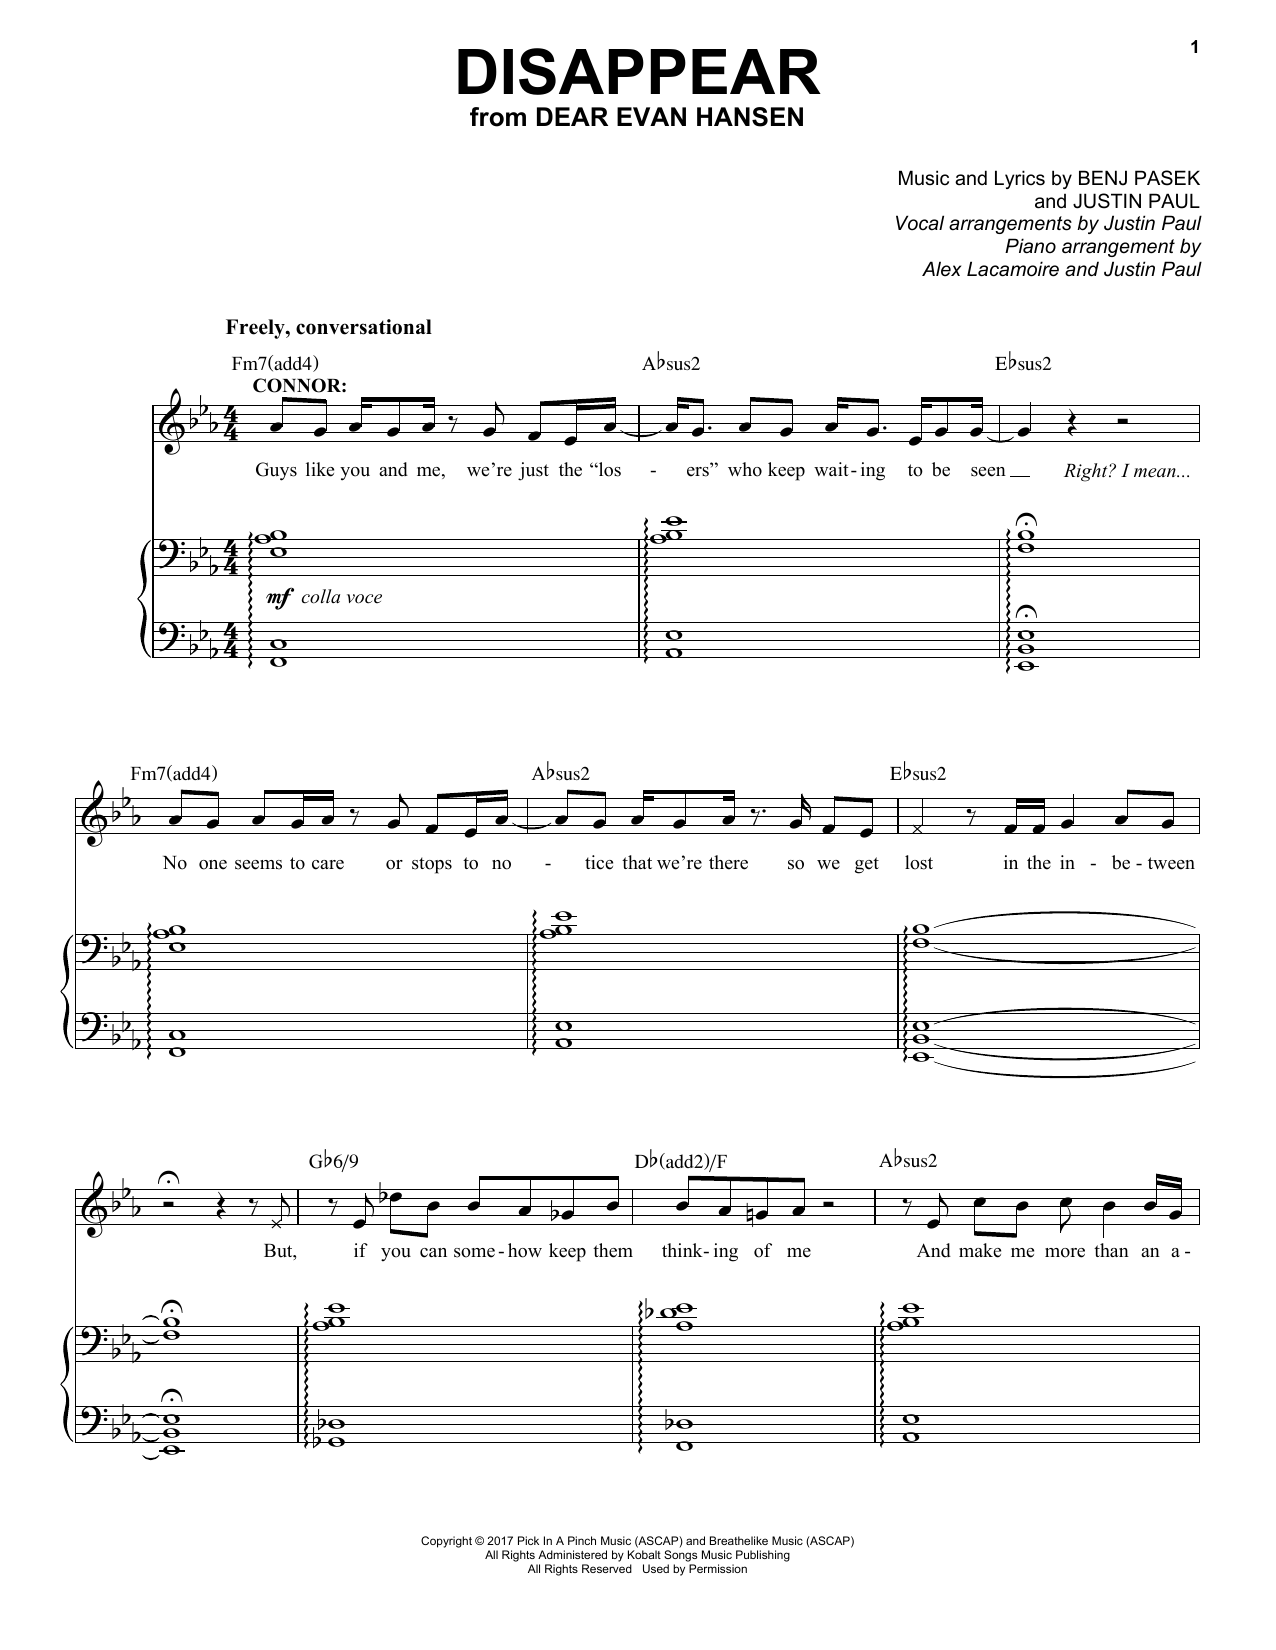 Pasek & Paul Disappear (from Dear Evan Hansen) Sheet Music Notes & Chords for Guitar Chords/Lyrics - Download or Print PDF